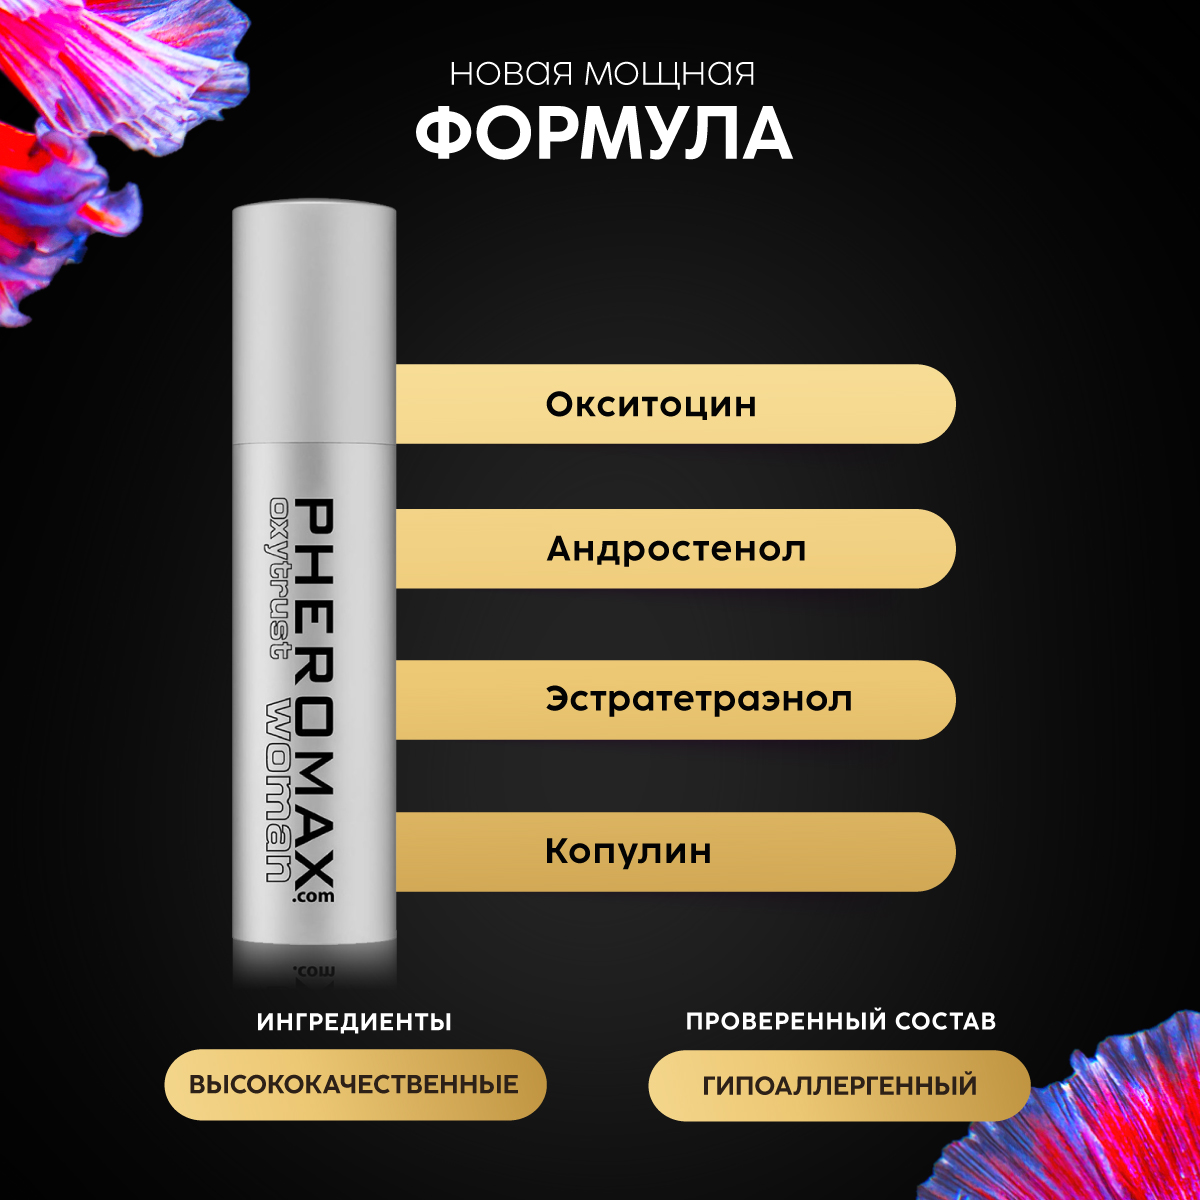 Концентрат феромонов для женщин Pheromax Oxytrust с окситоцином, 14 мл